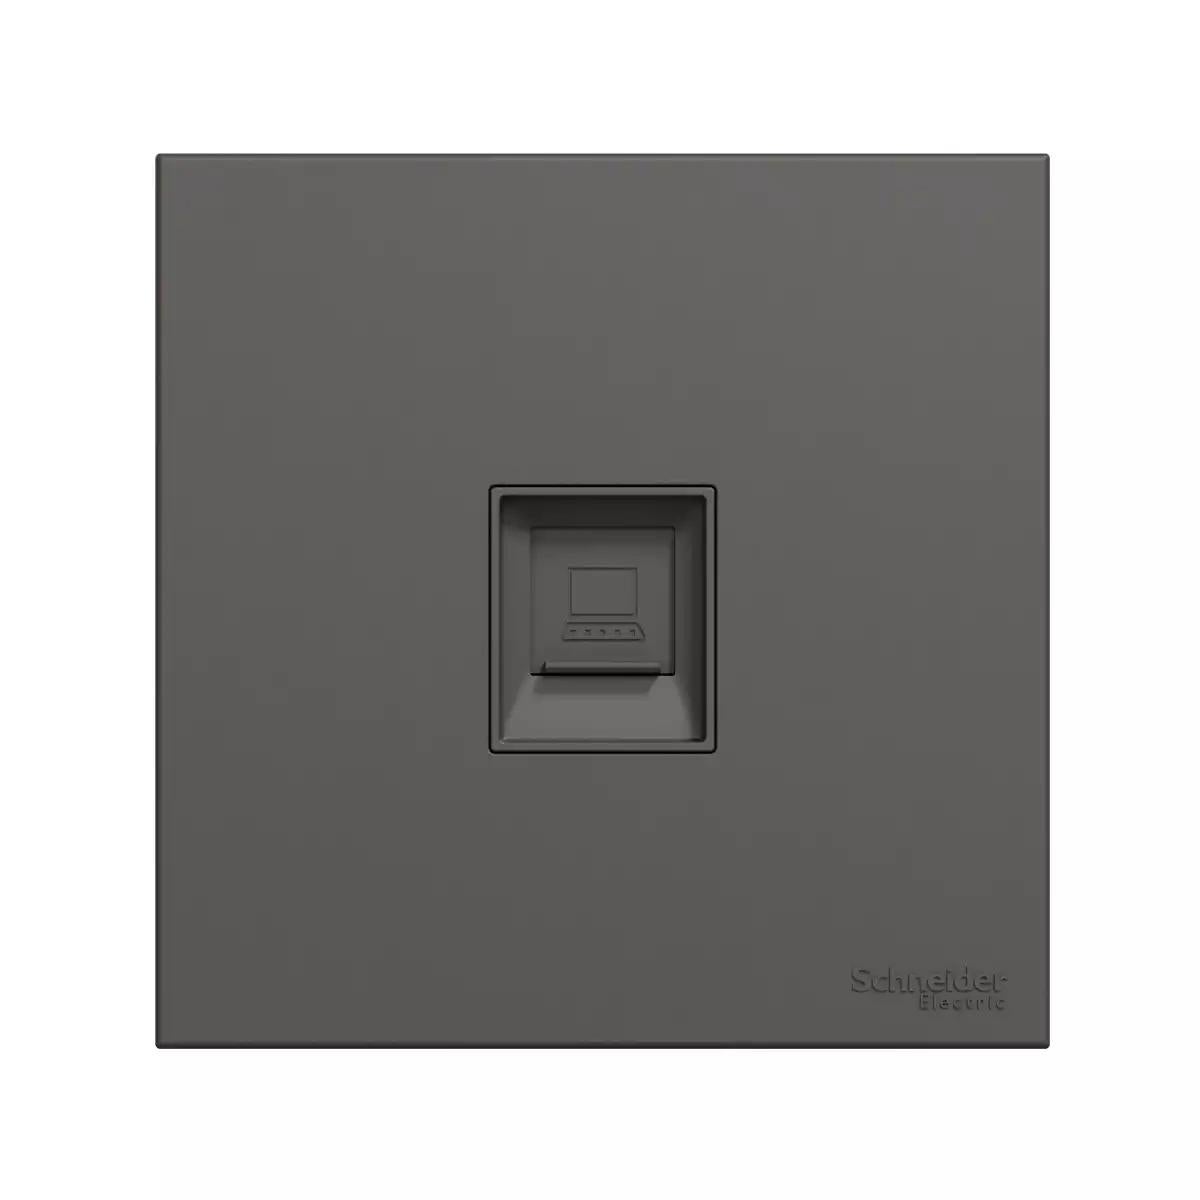 AvatarOn C Data socket, RJ45, Cat 5e, 1 gang, keystone on shuttered wall plate, Dark Grey